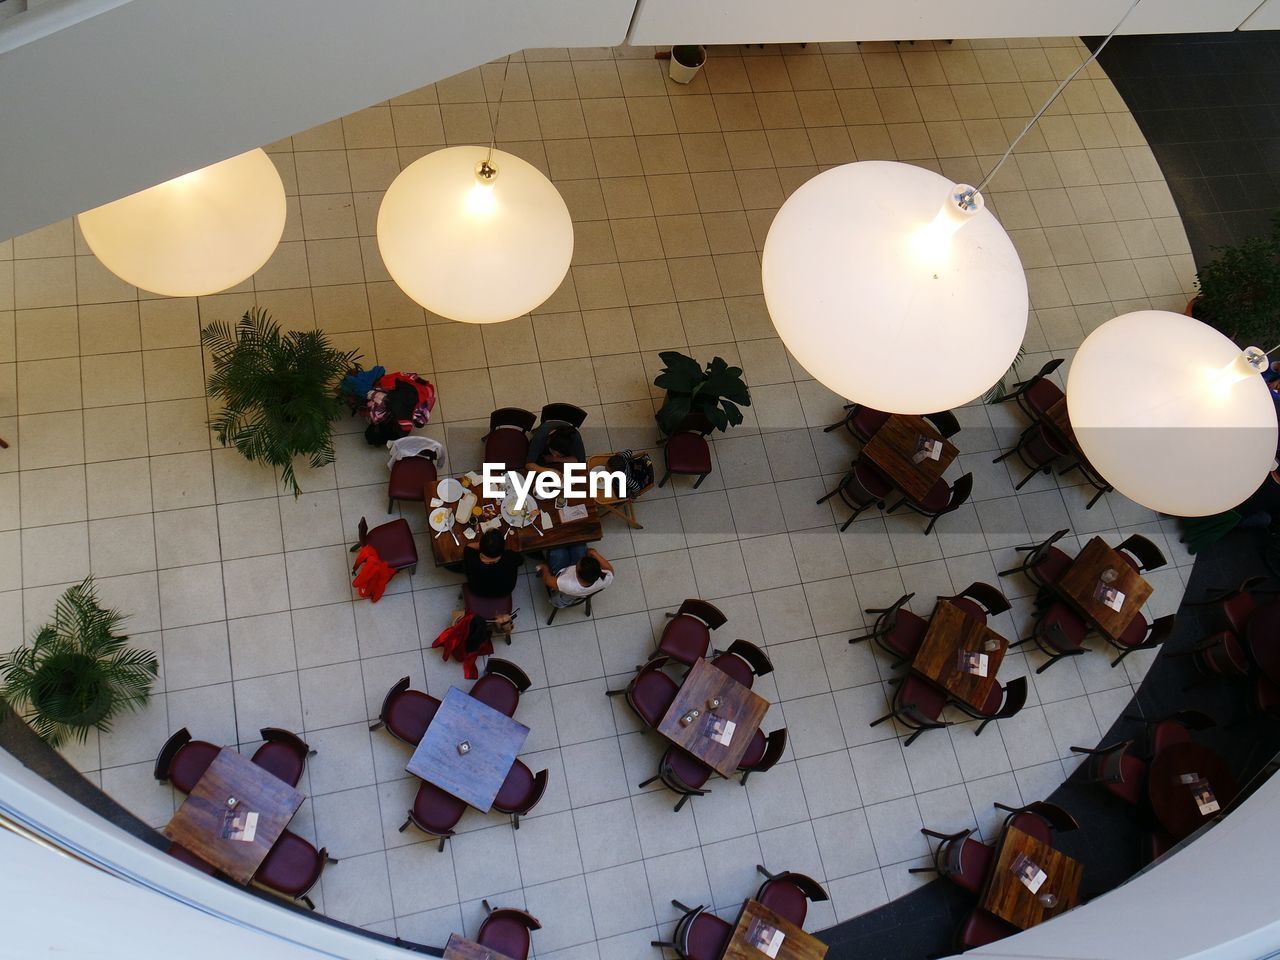 Restaurant tables in building lobby